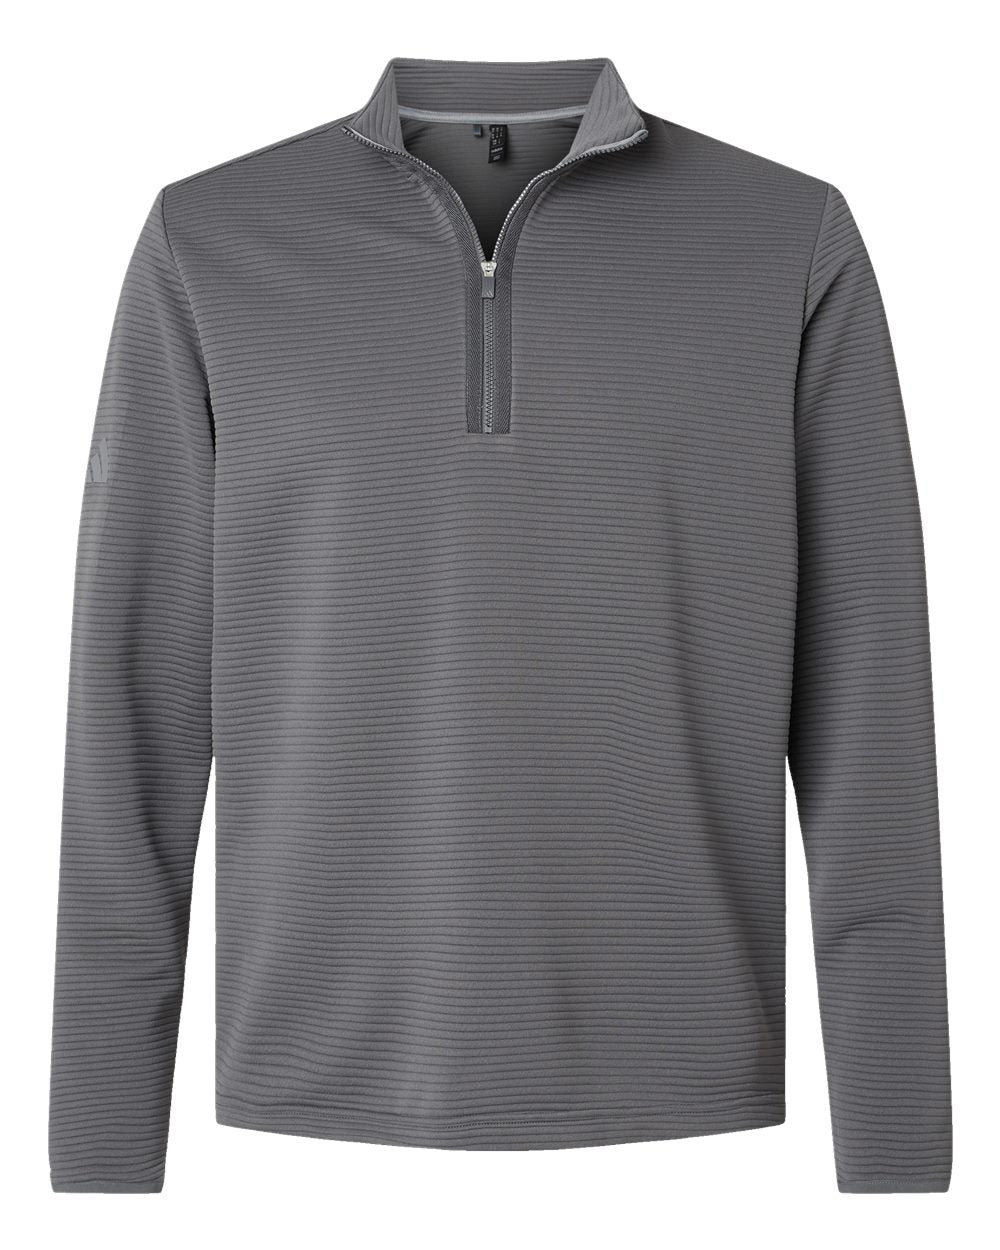 Adidas A588 Spacer Quarter-Zip Pullover #color_Grey Five